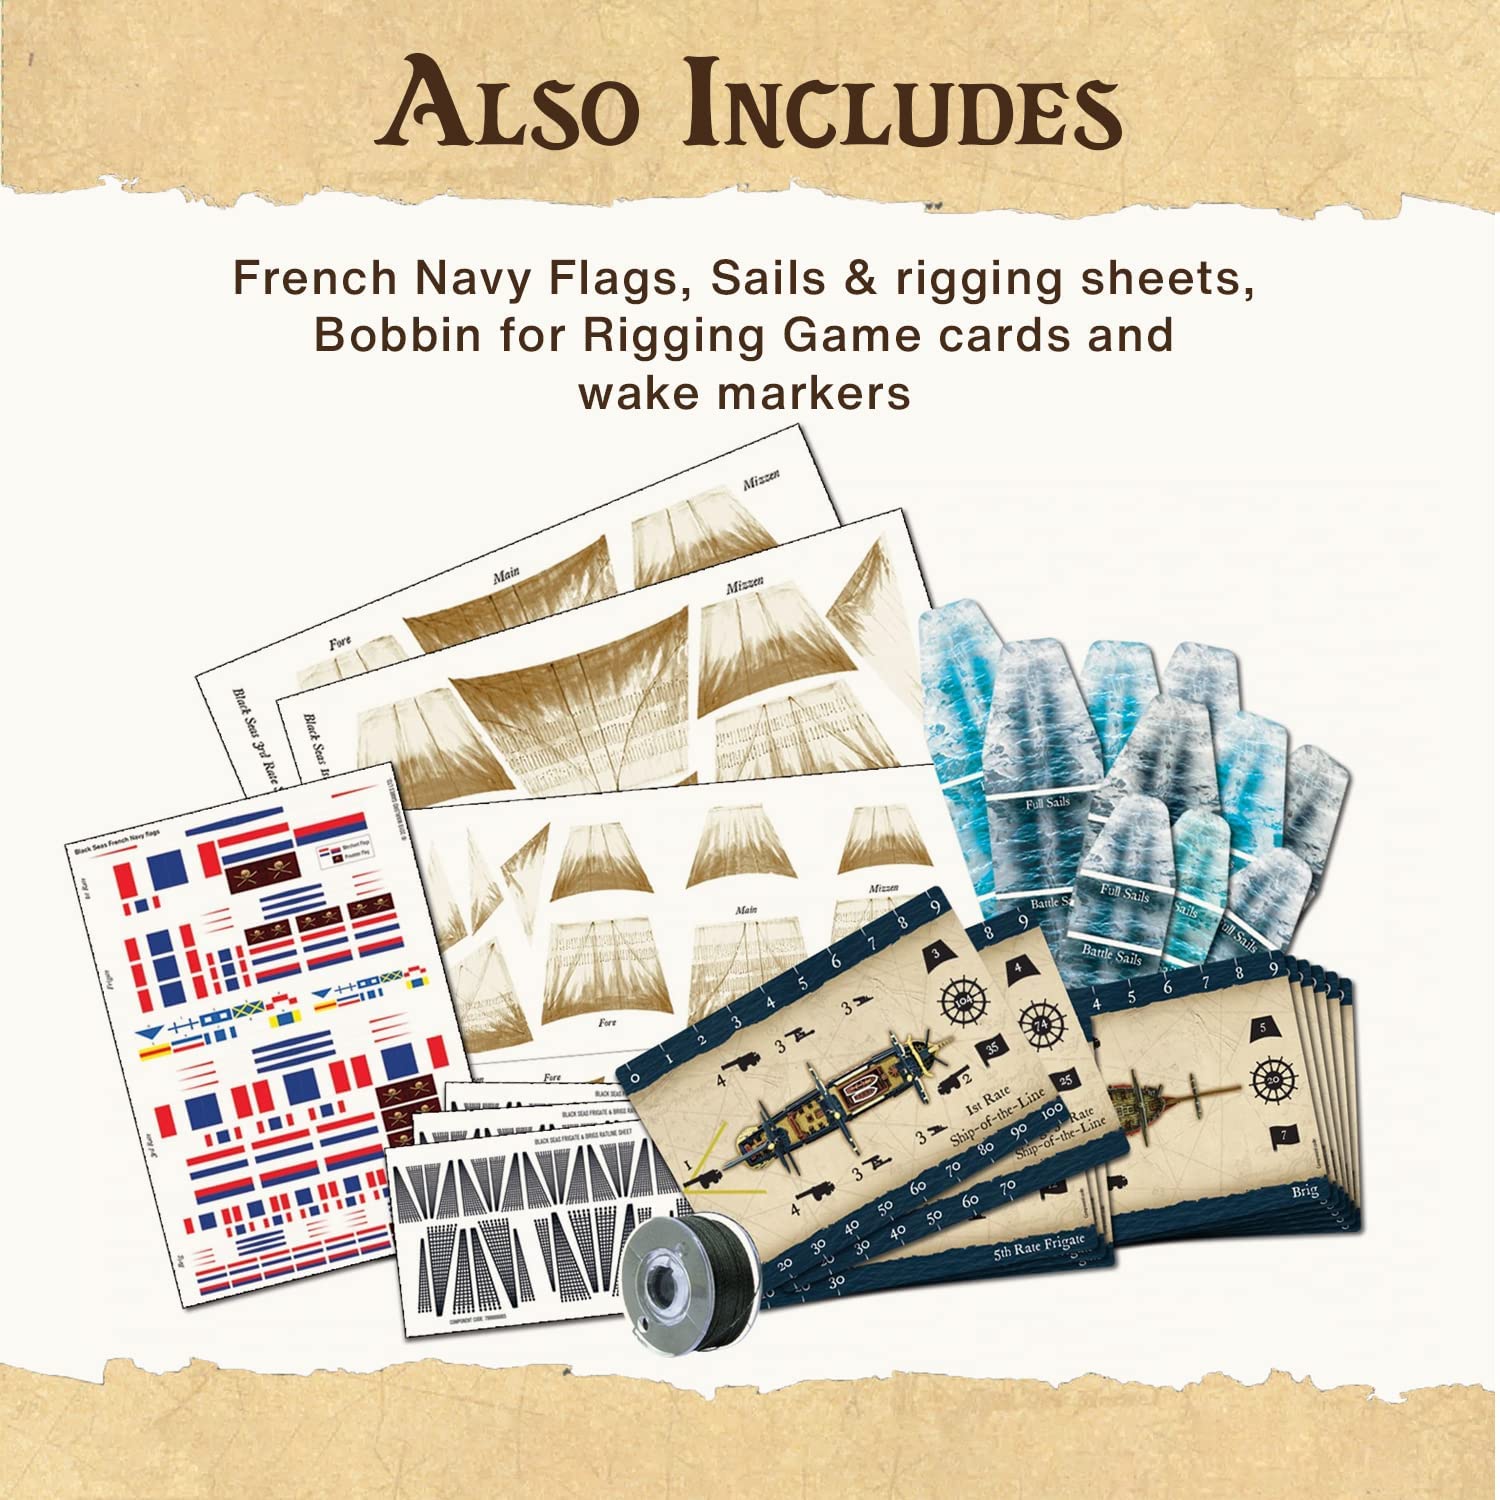 Black Seas - French Navy Fleet (1770-1830)